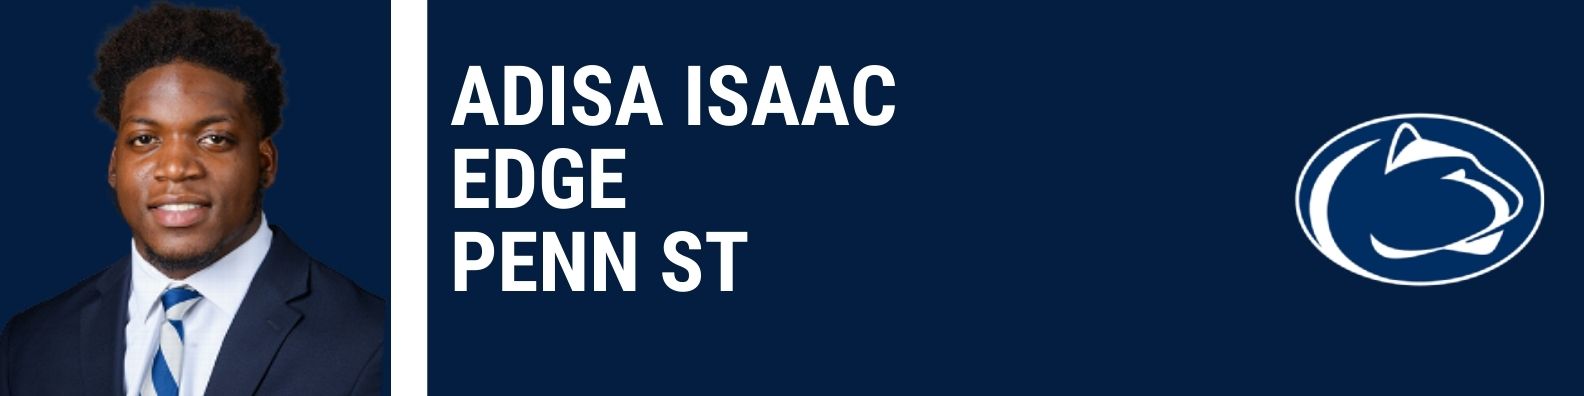 Adisa Isaac, Penn St